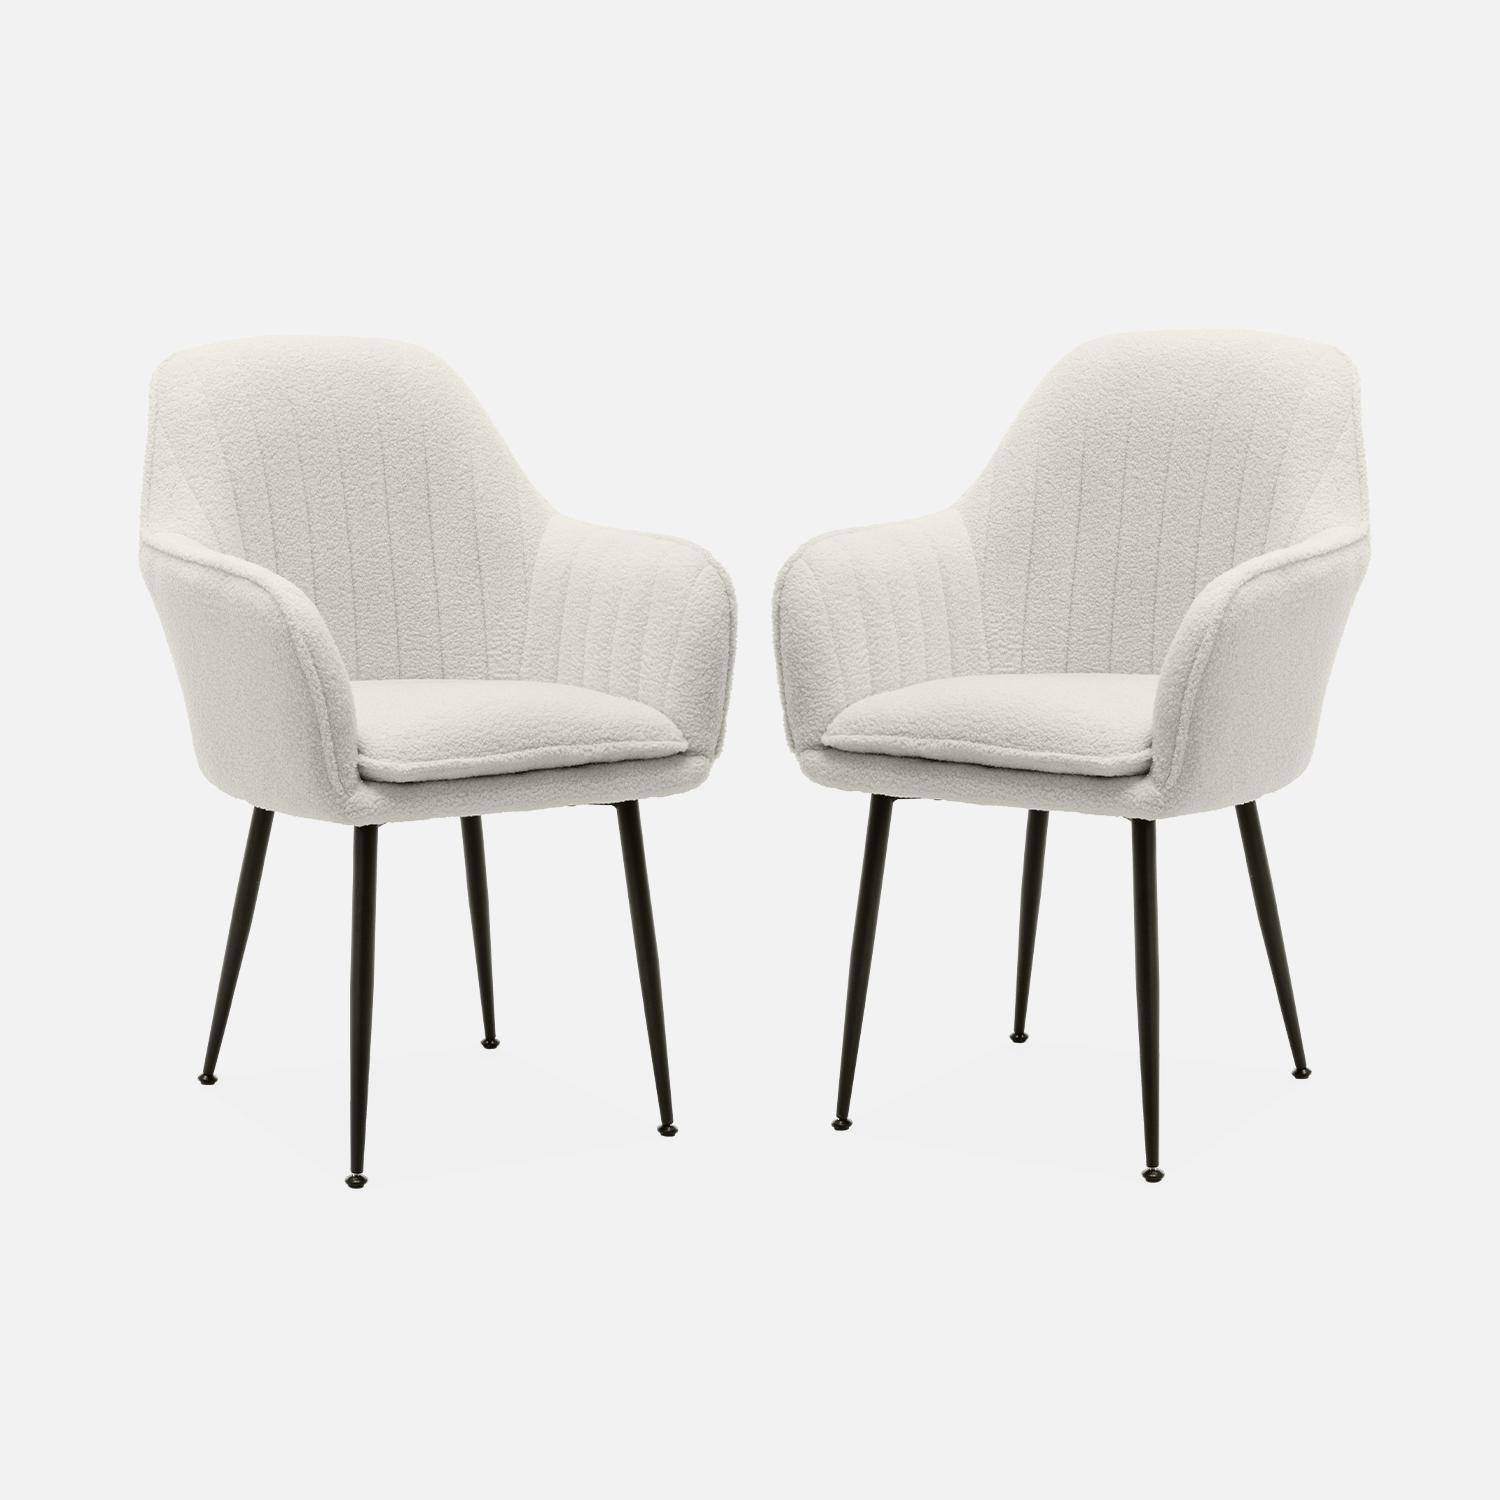 Set of 2 Boucle armchair with metal legs, 58x58x85cm - Shella Boucle - White,sweeek,Photo3